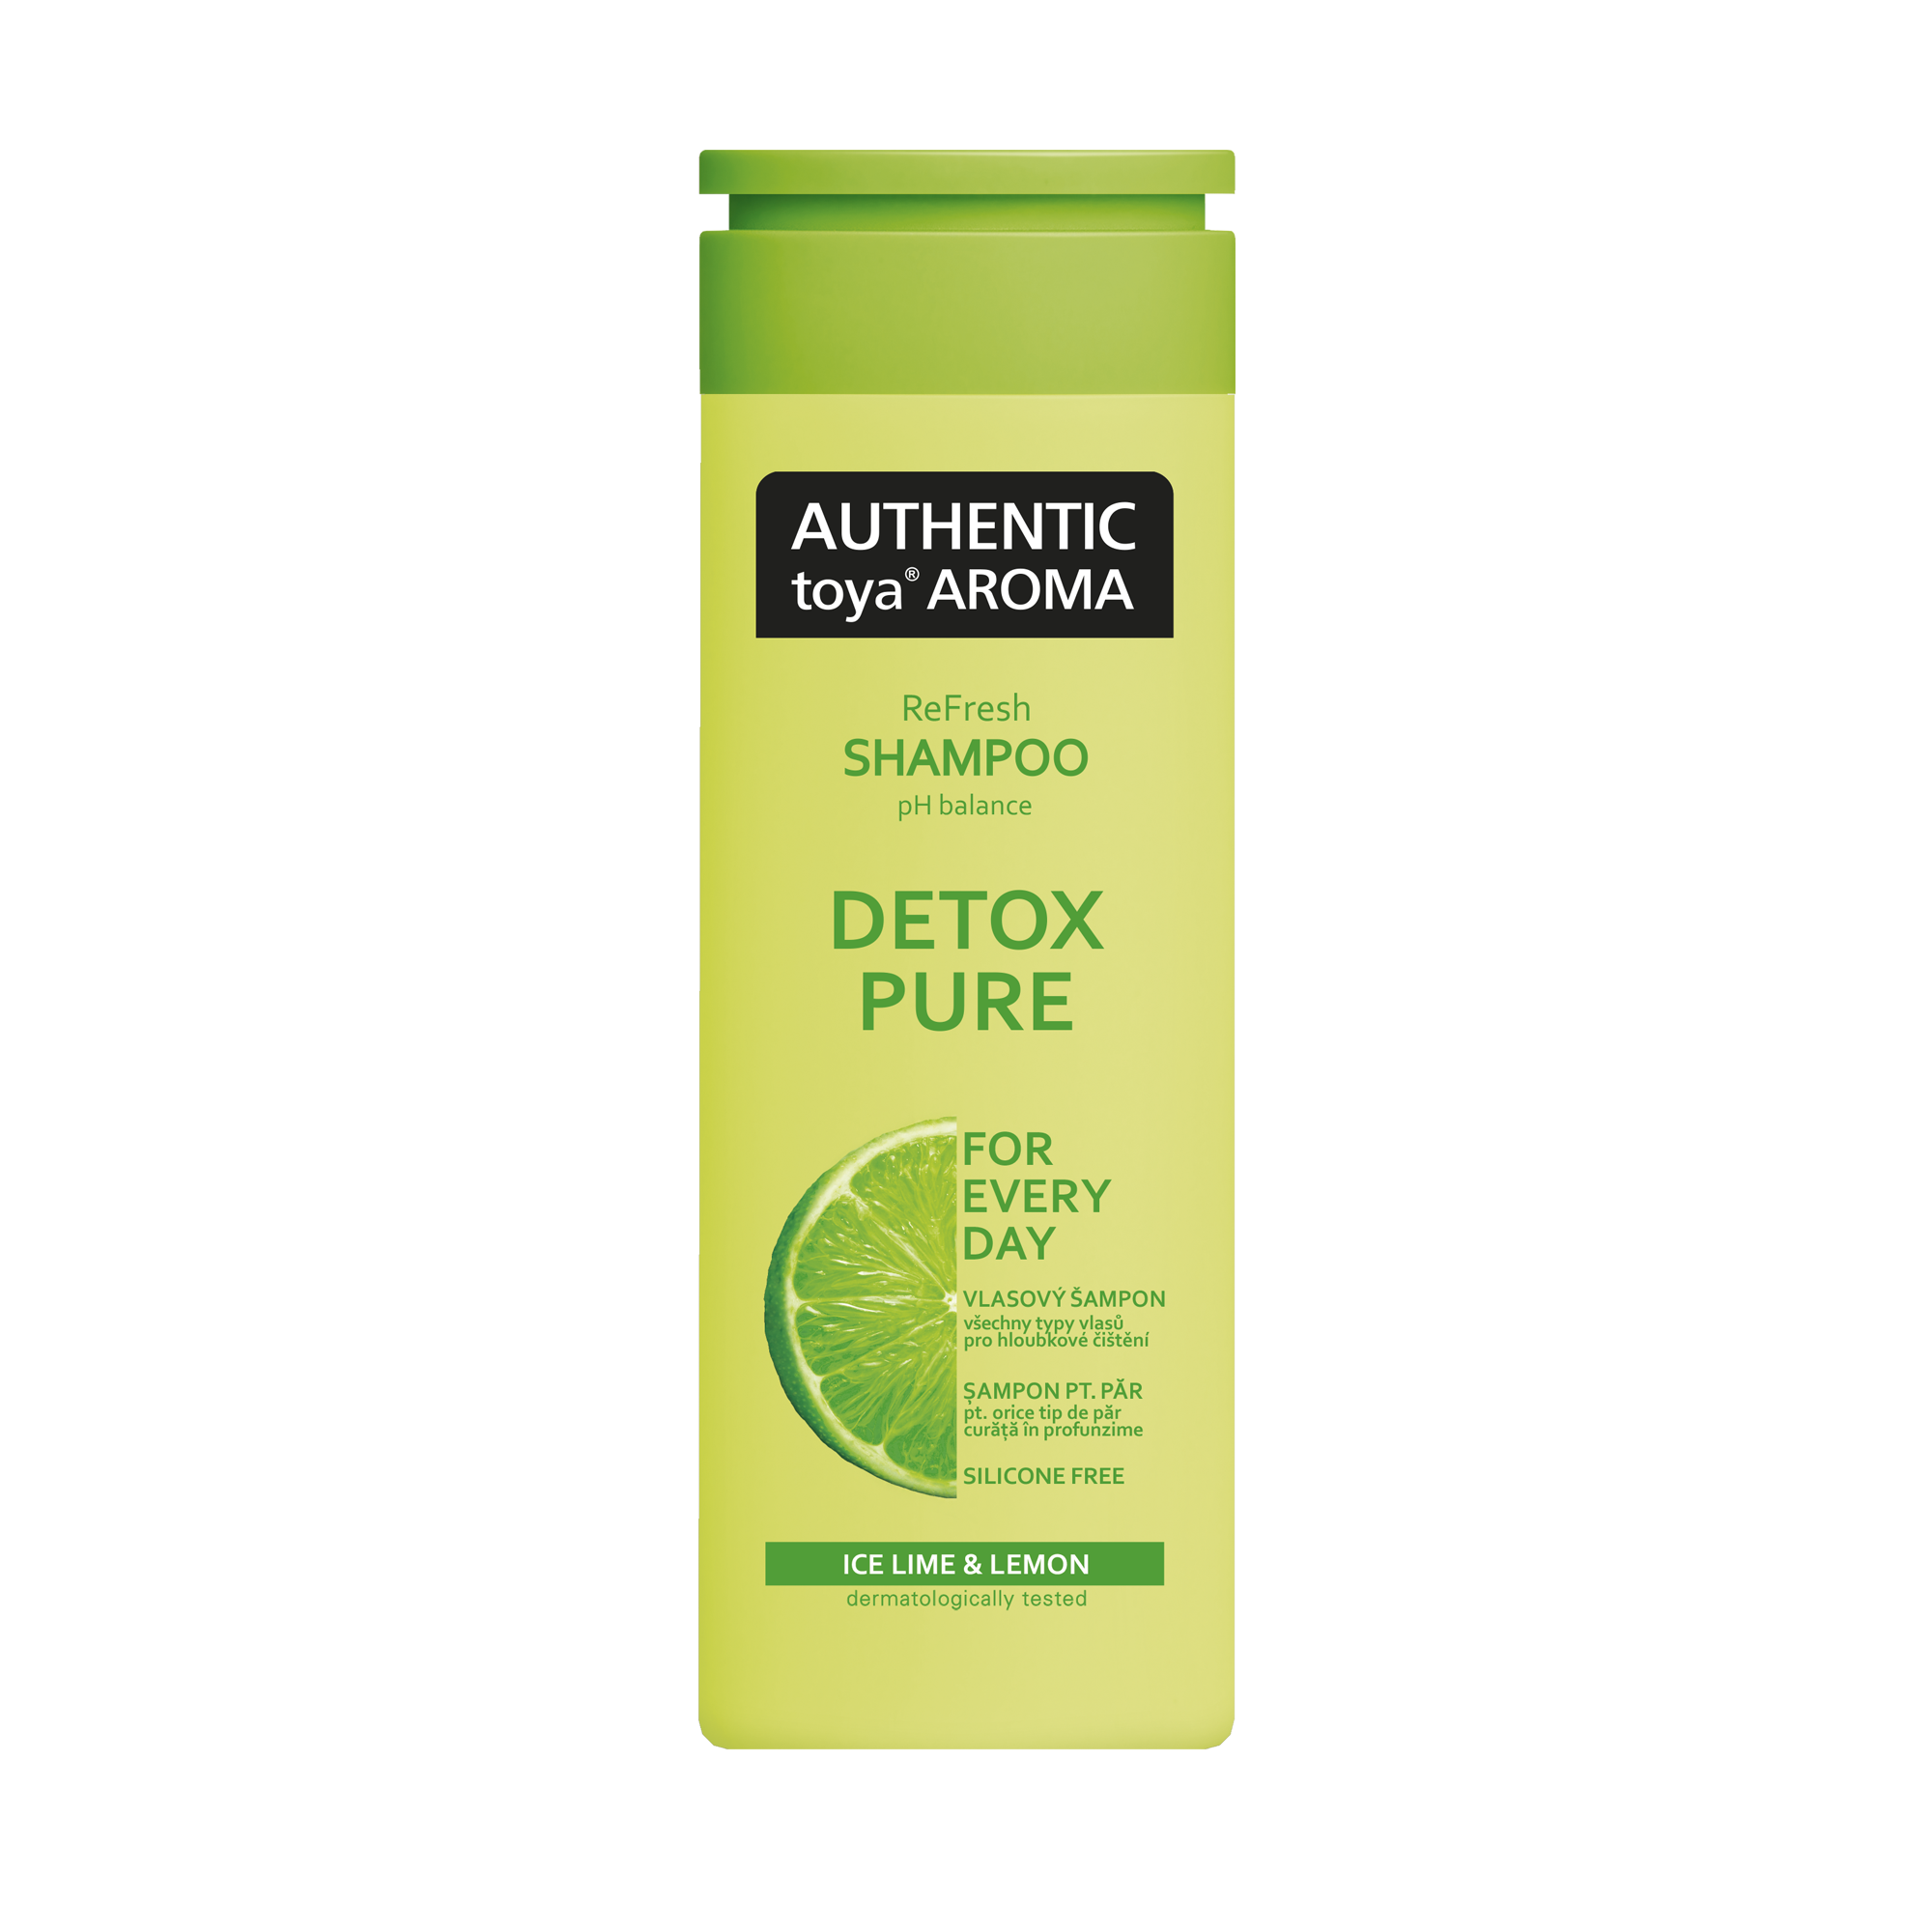 AUTHENTIC toya AROMA vlasový šampón Detox Pure 